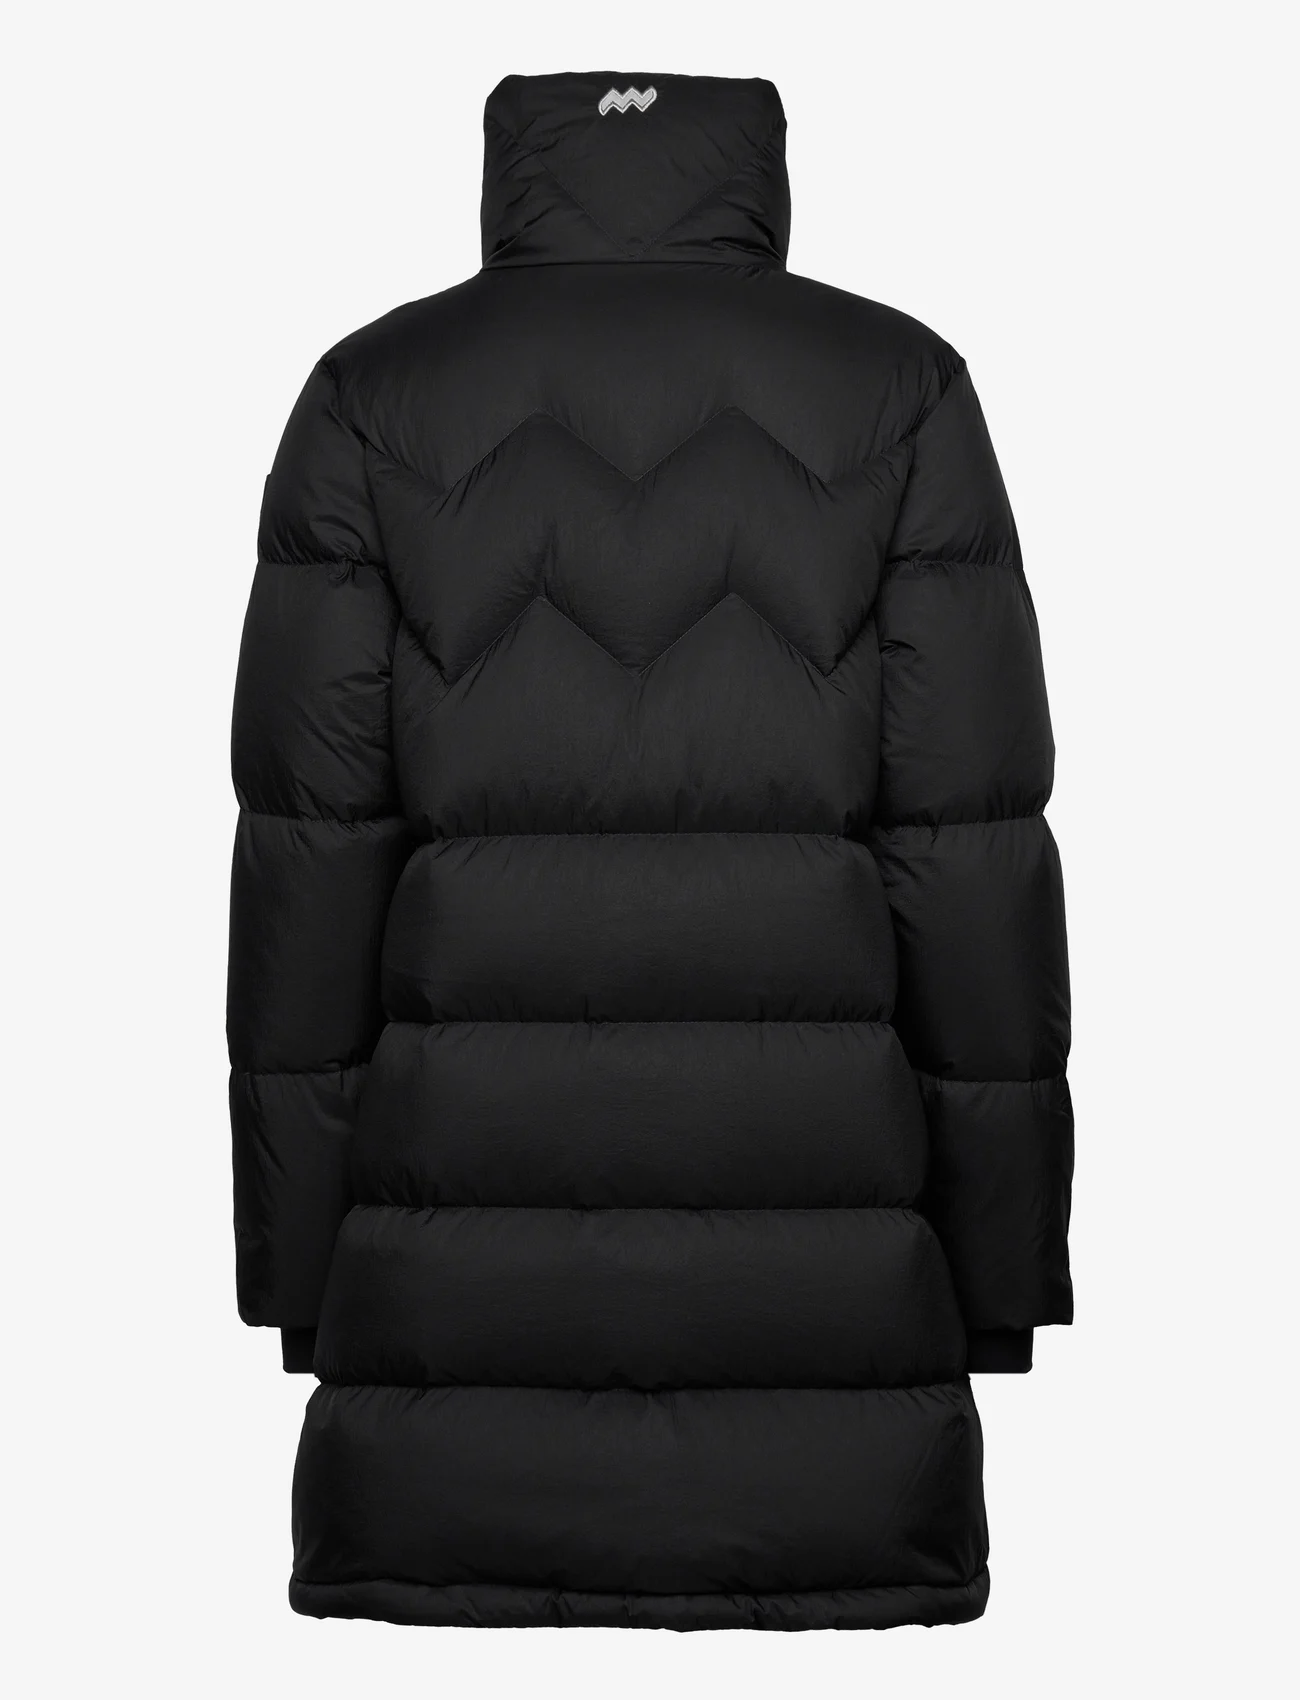 Mountain Works - EPITOME DOWN COAT - winter coats - black - 1